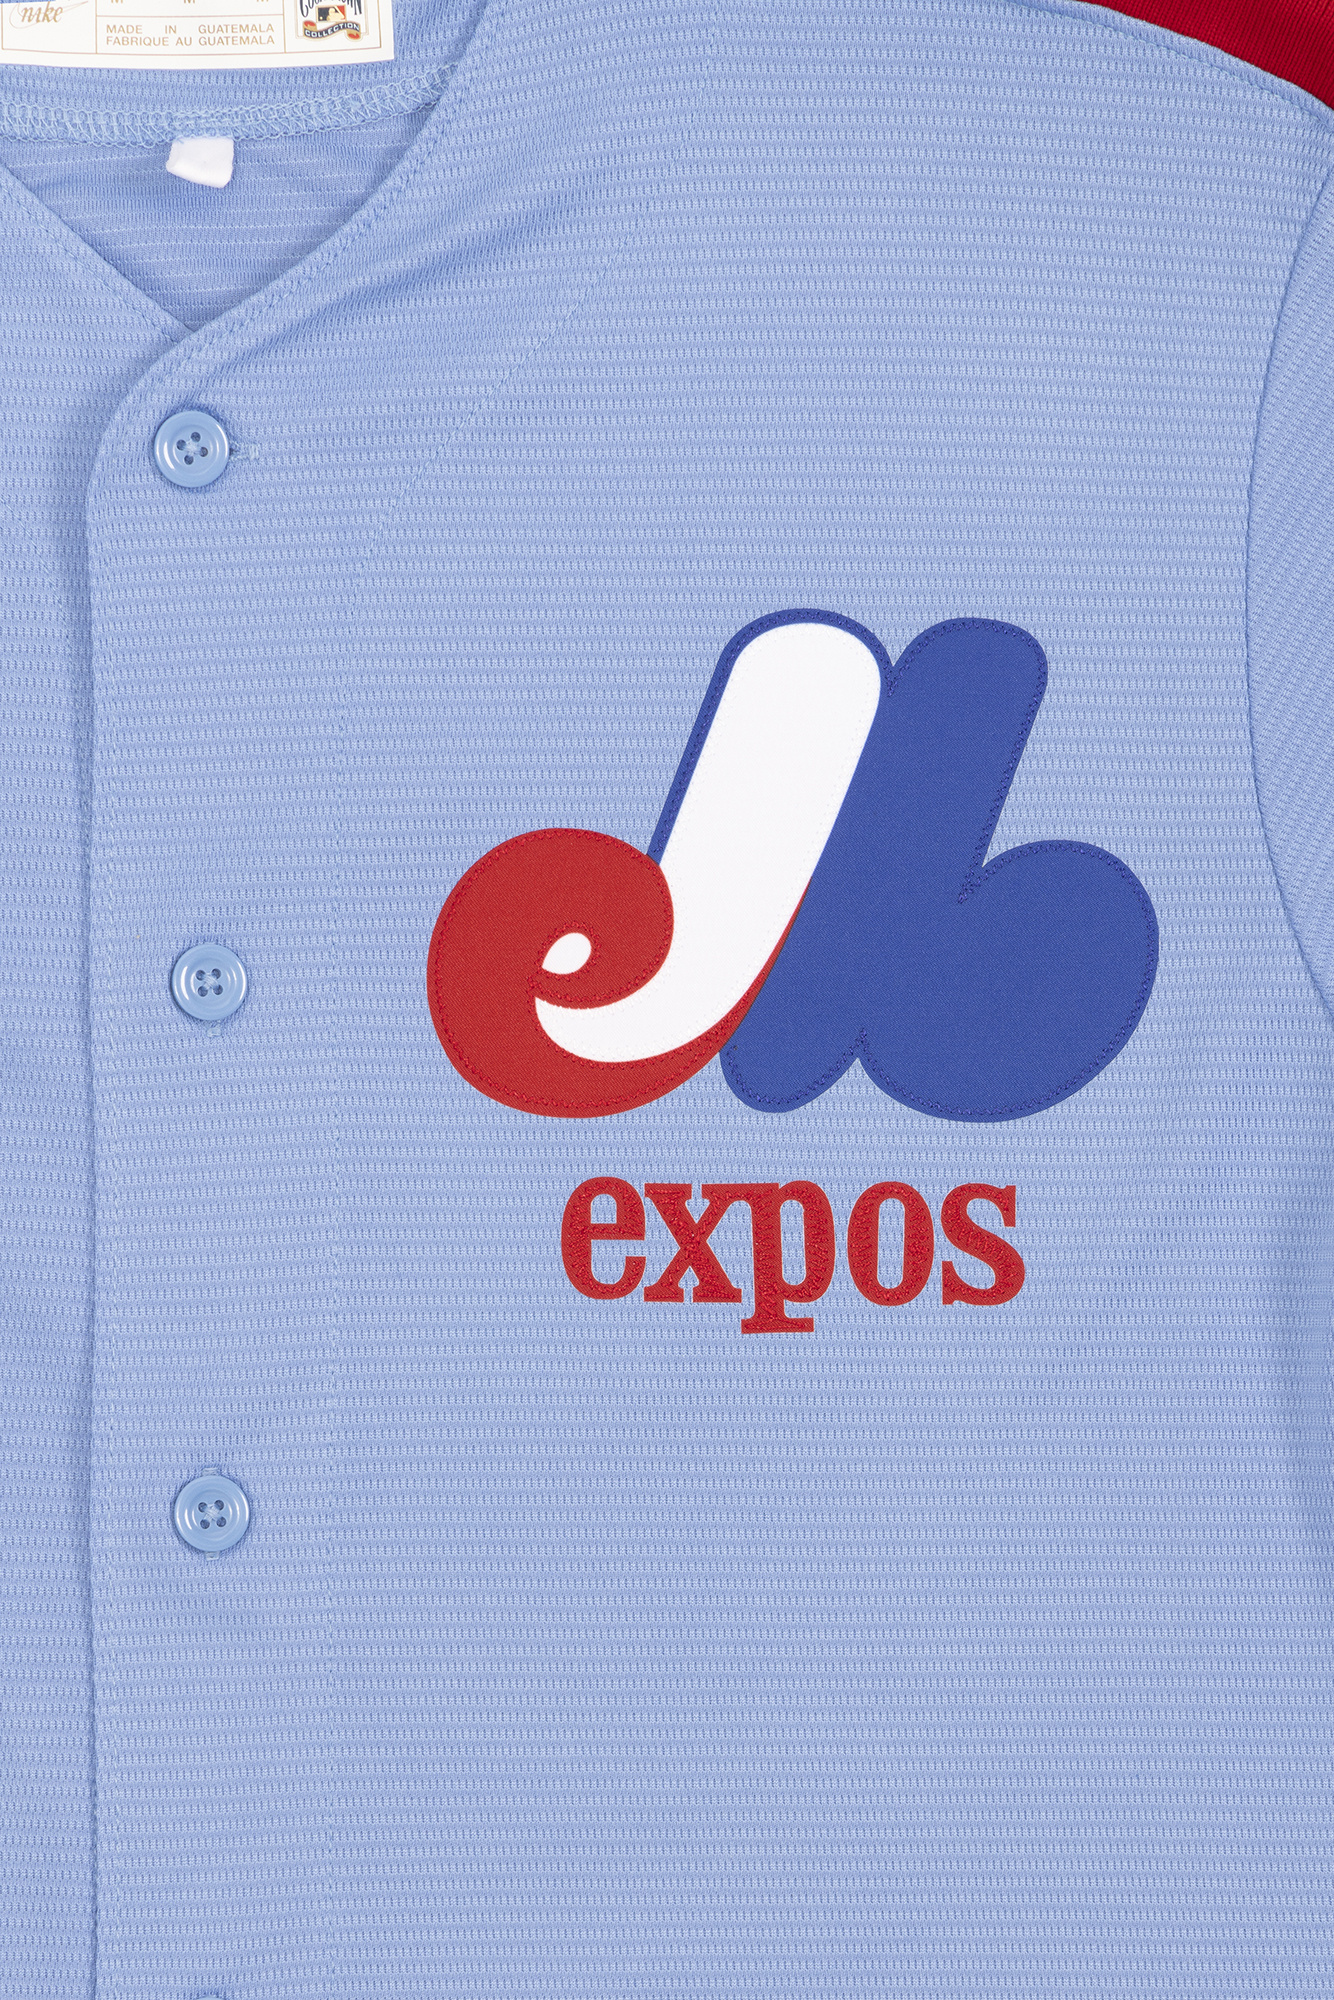 Montreal Expos Vintage Apparel & Jerseys